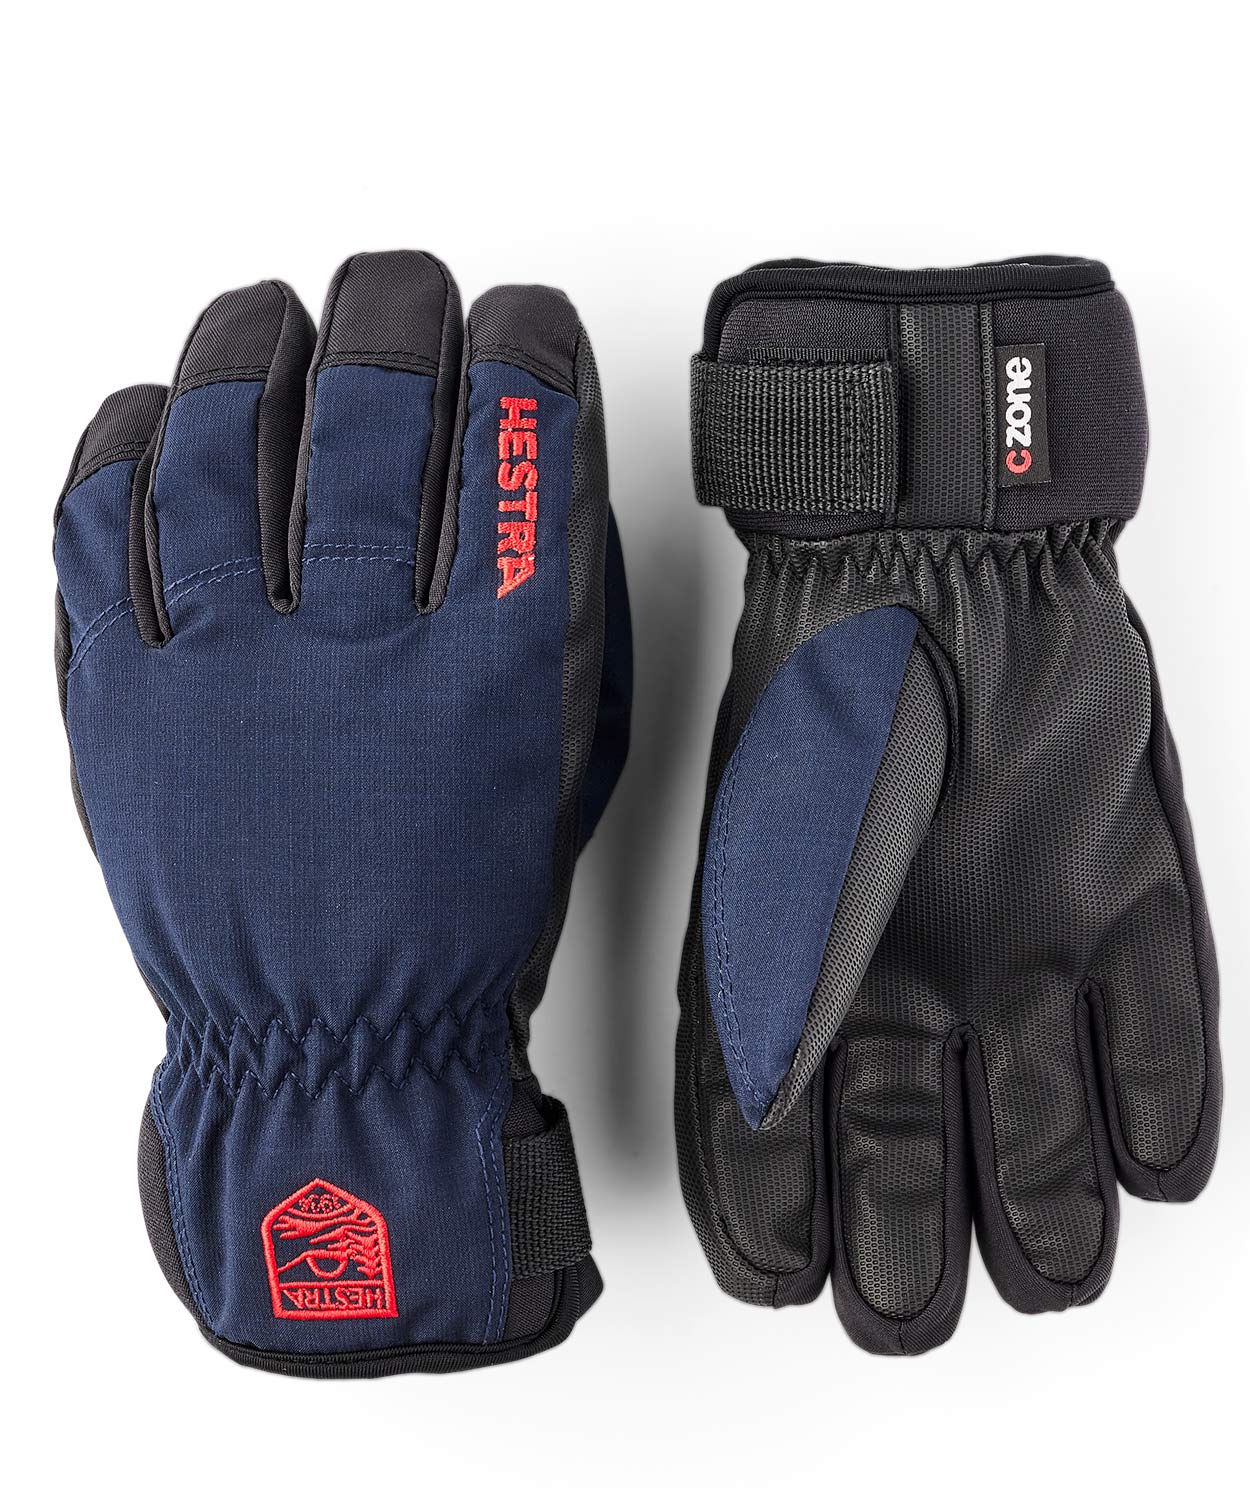 Ferox Primaloft 5 finger Glove